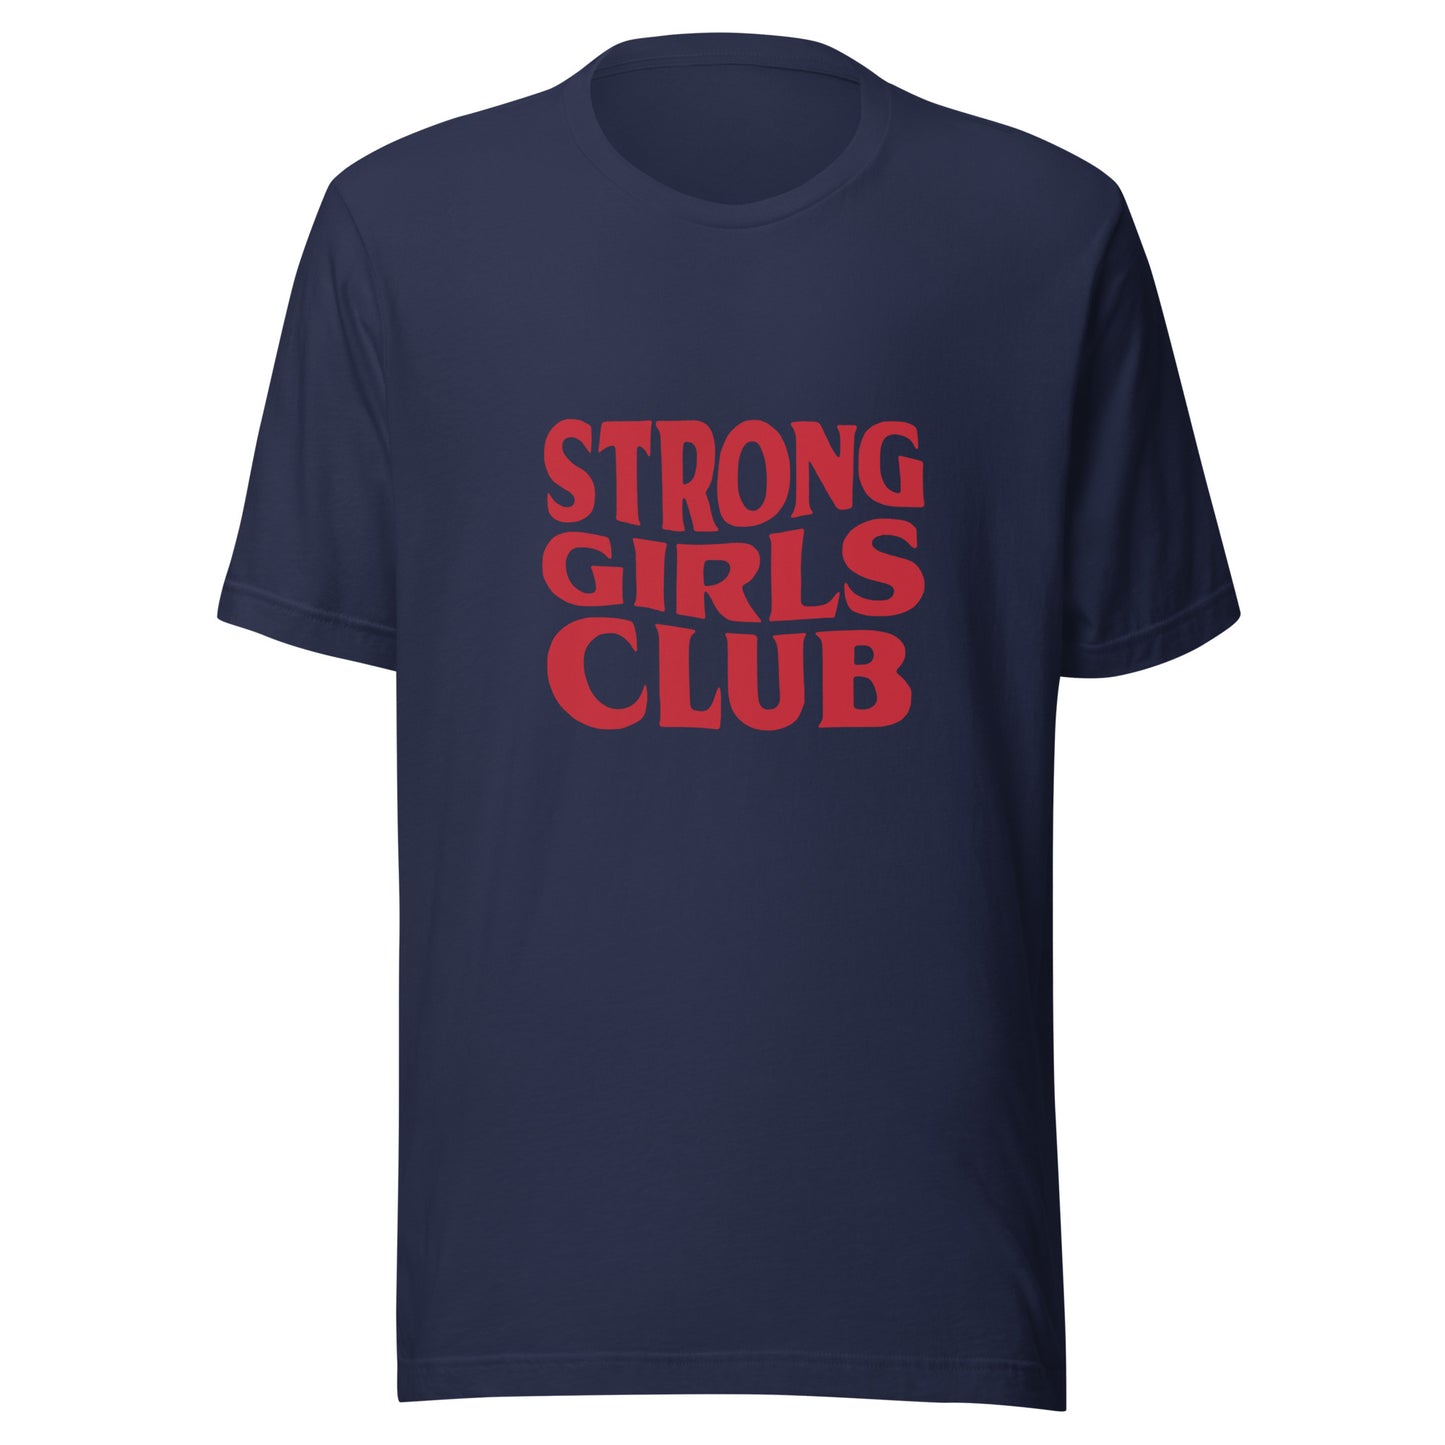 Strong Girls Club Tee